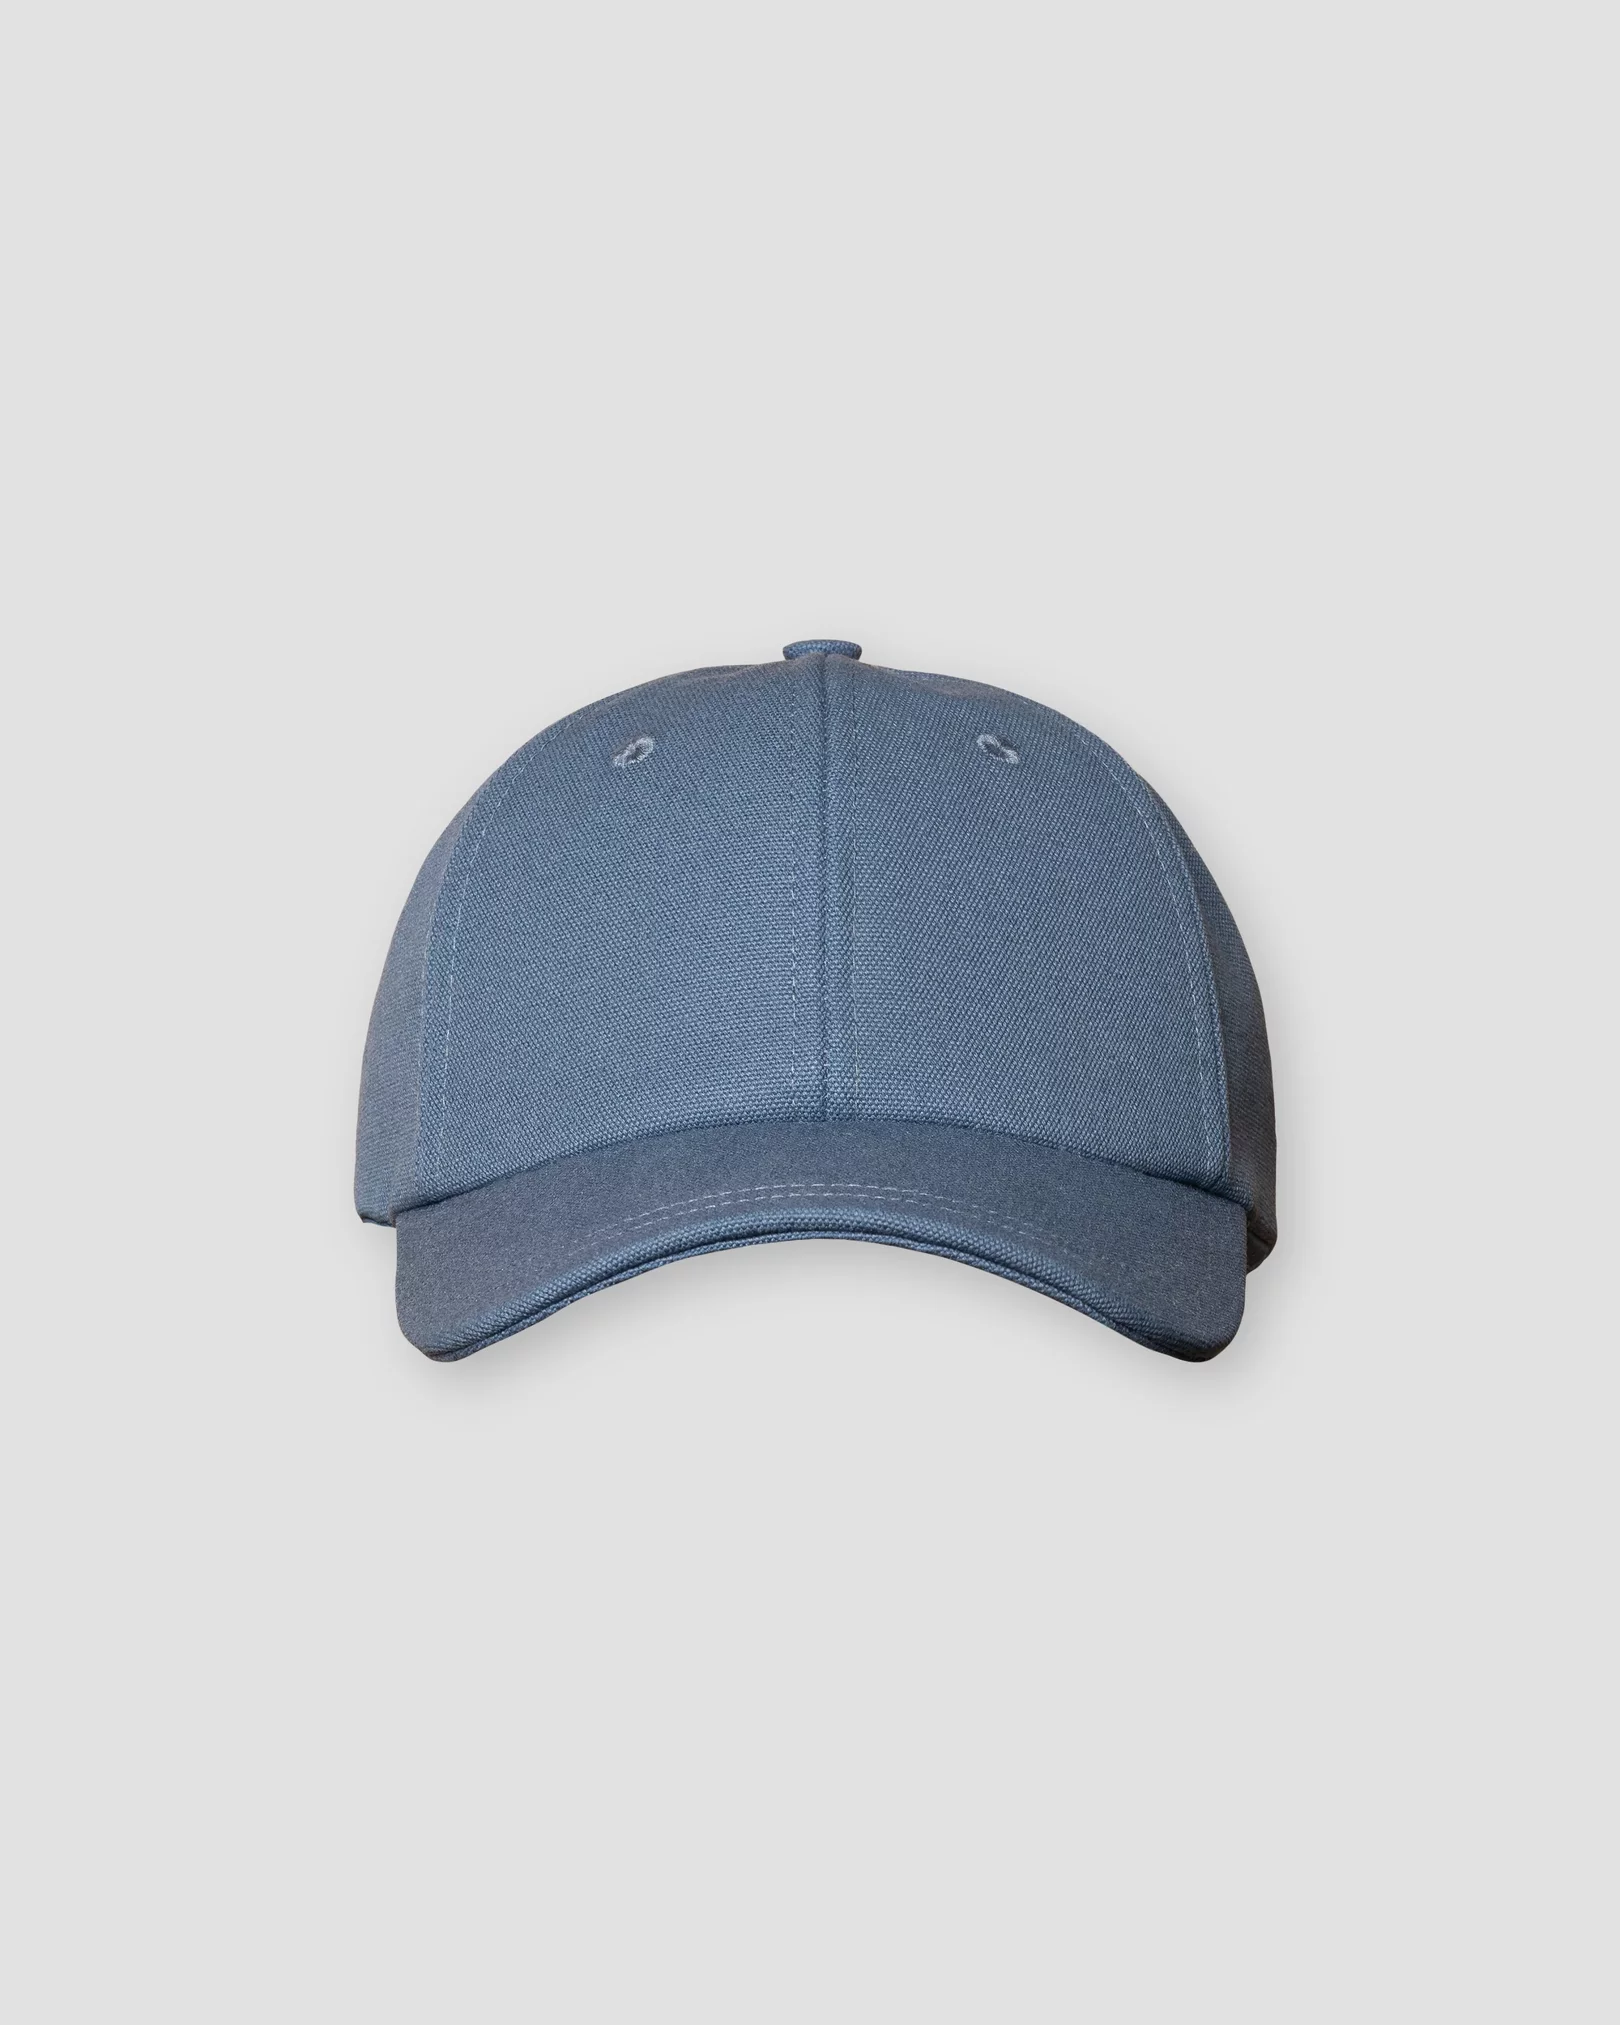 Eton - mid blue cotton cap